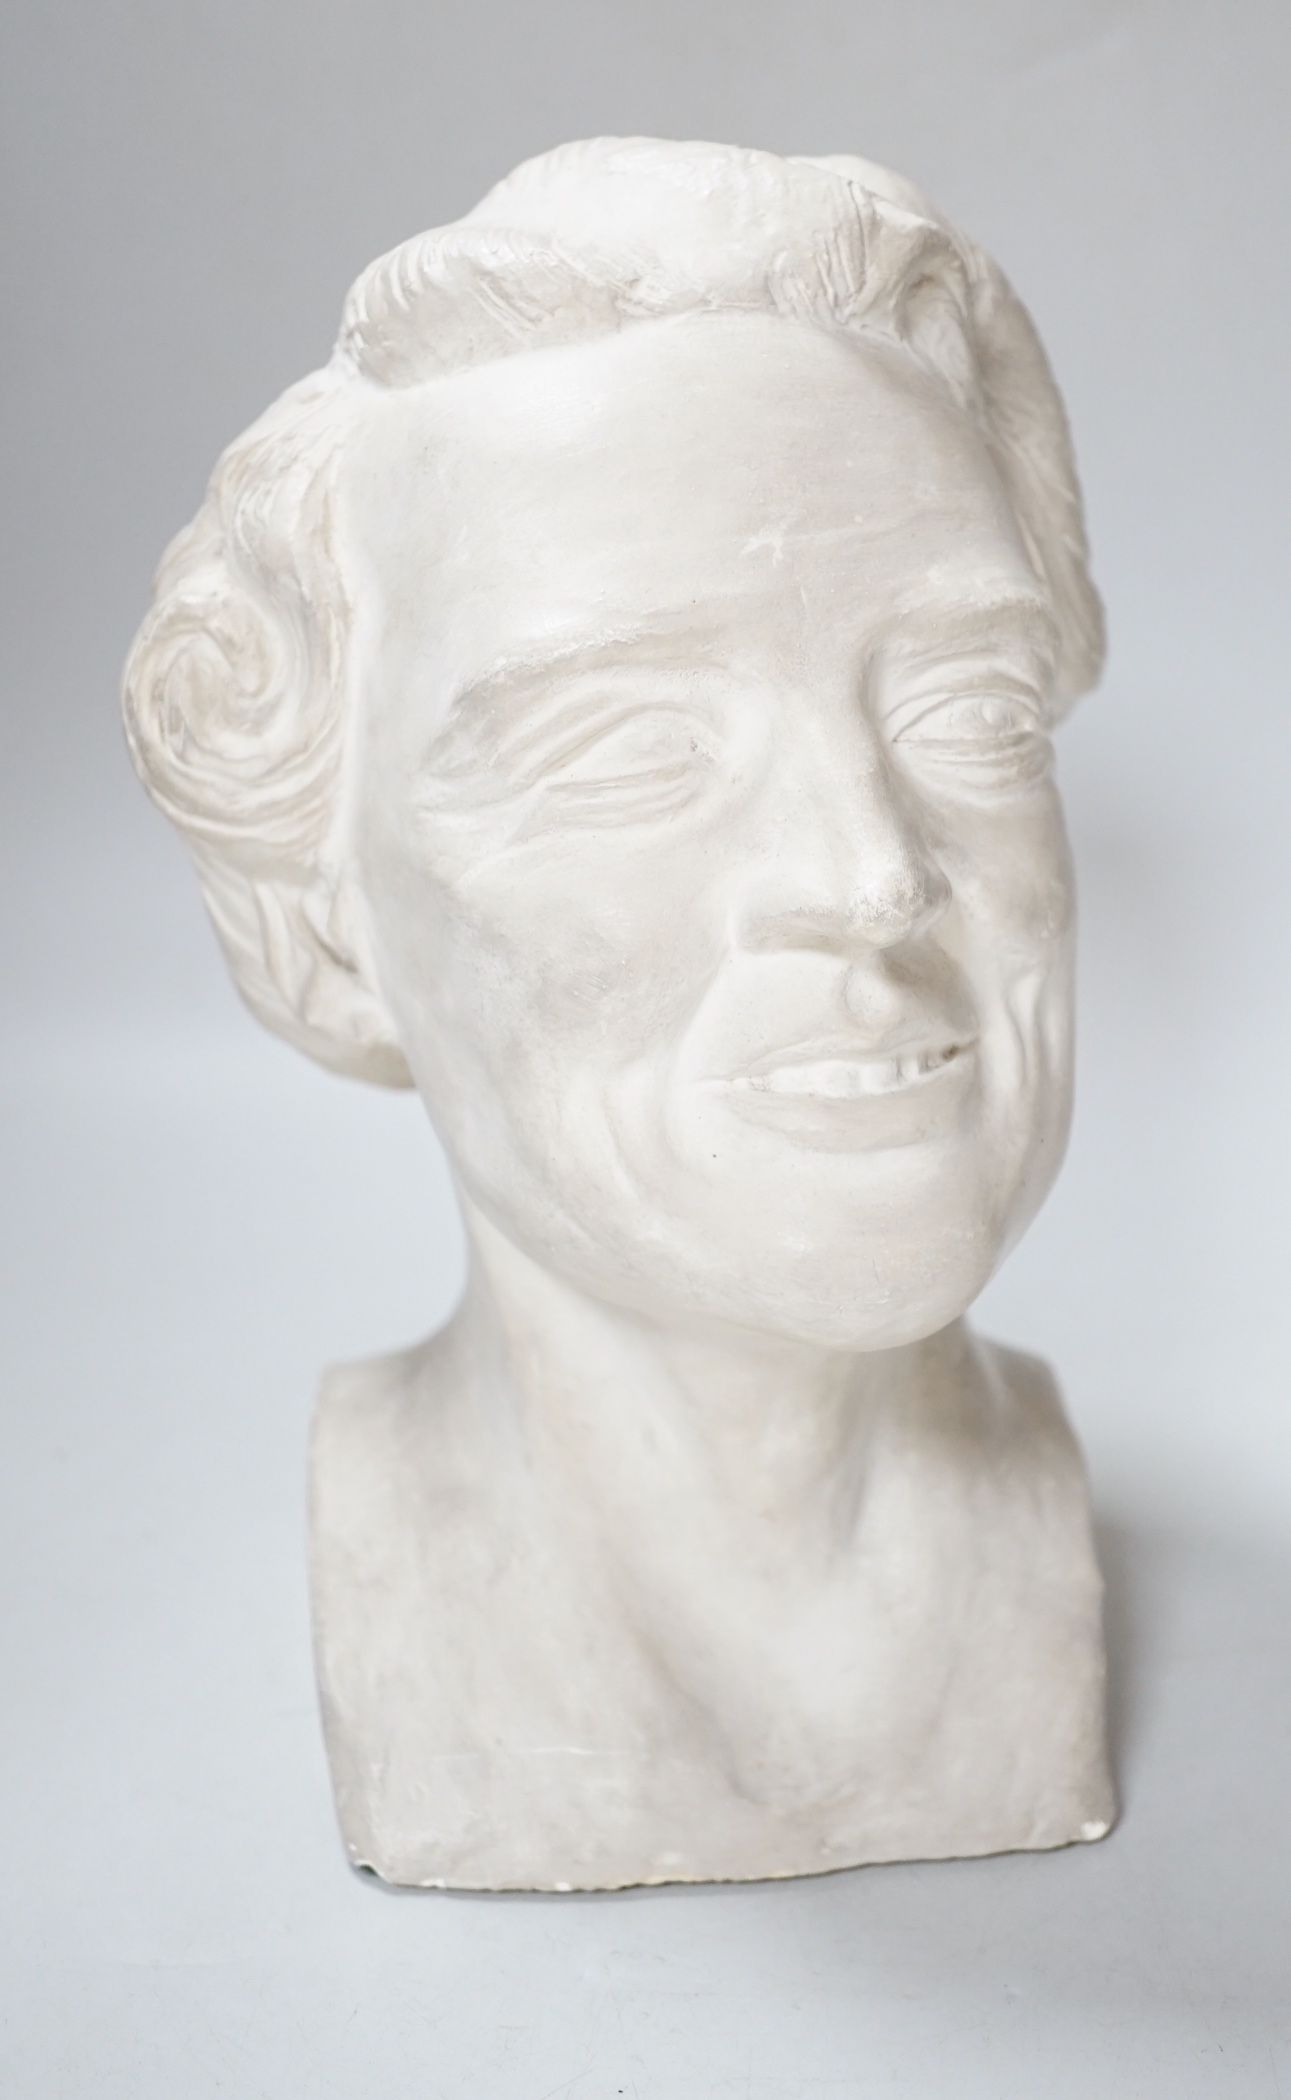 A plaster bust, artist who created St Mary de Haura glass windows, 25cm high